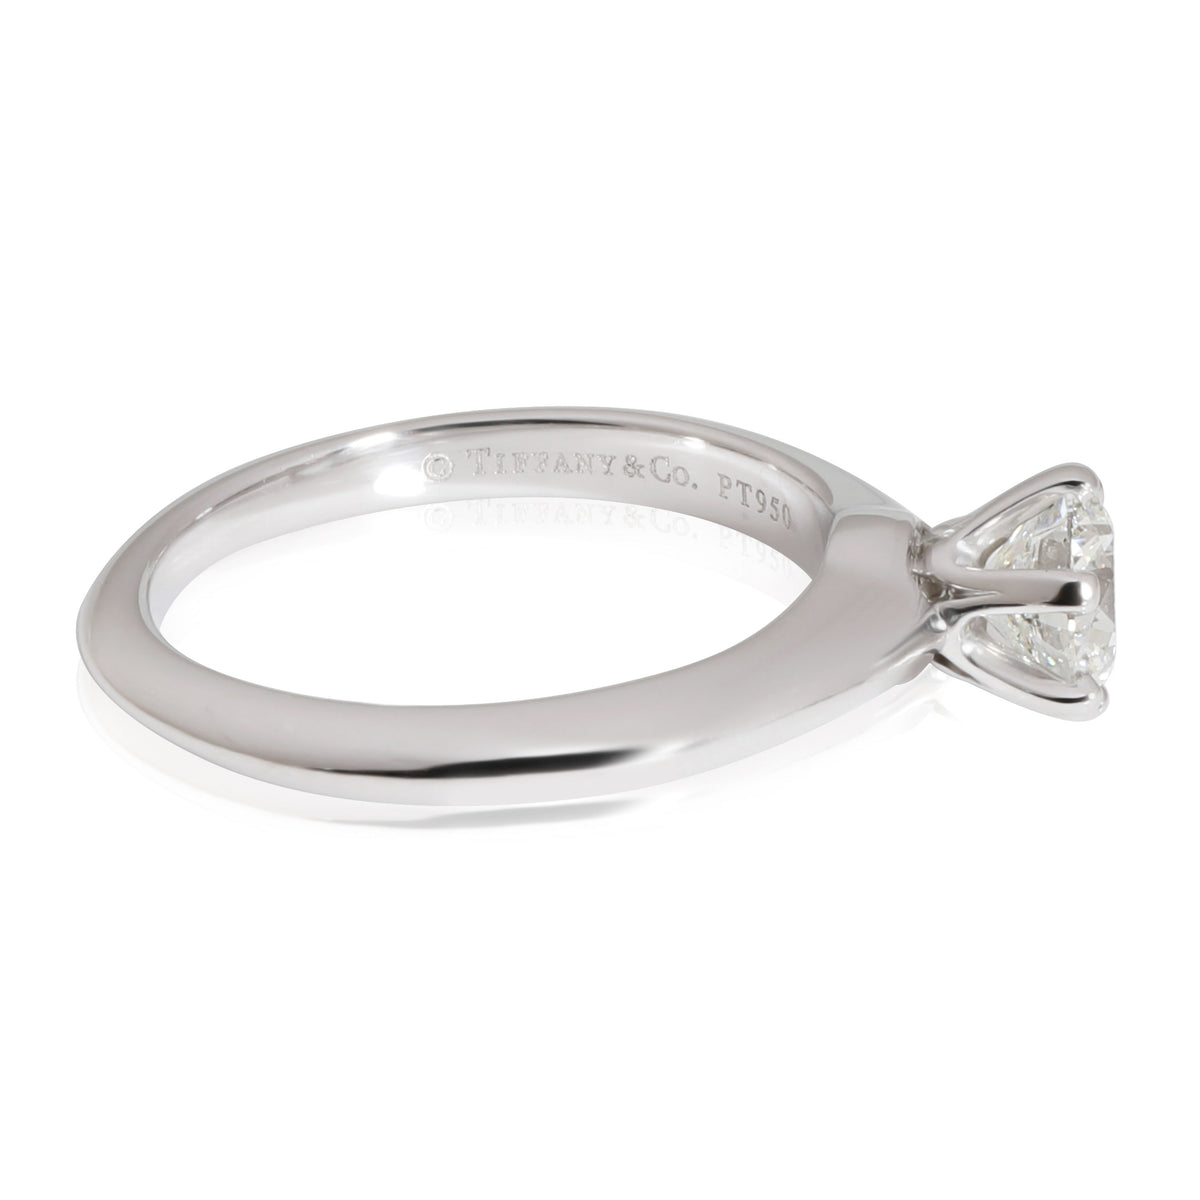 Tiffany & Co. Diamond Engagement Ring in Platinum H VVS2 0.76 CTW